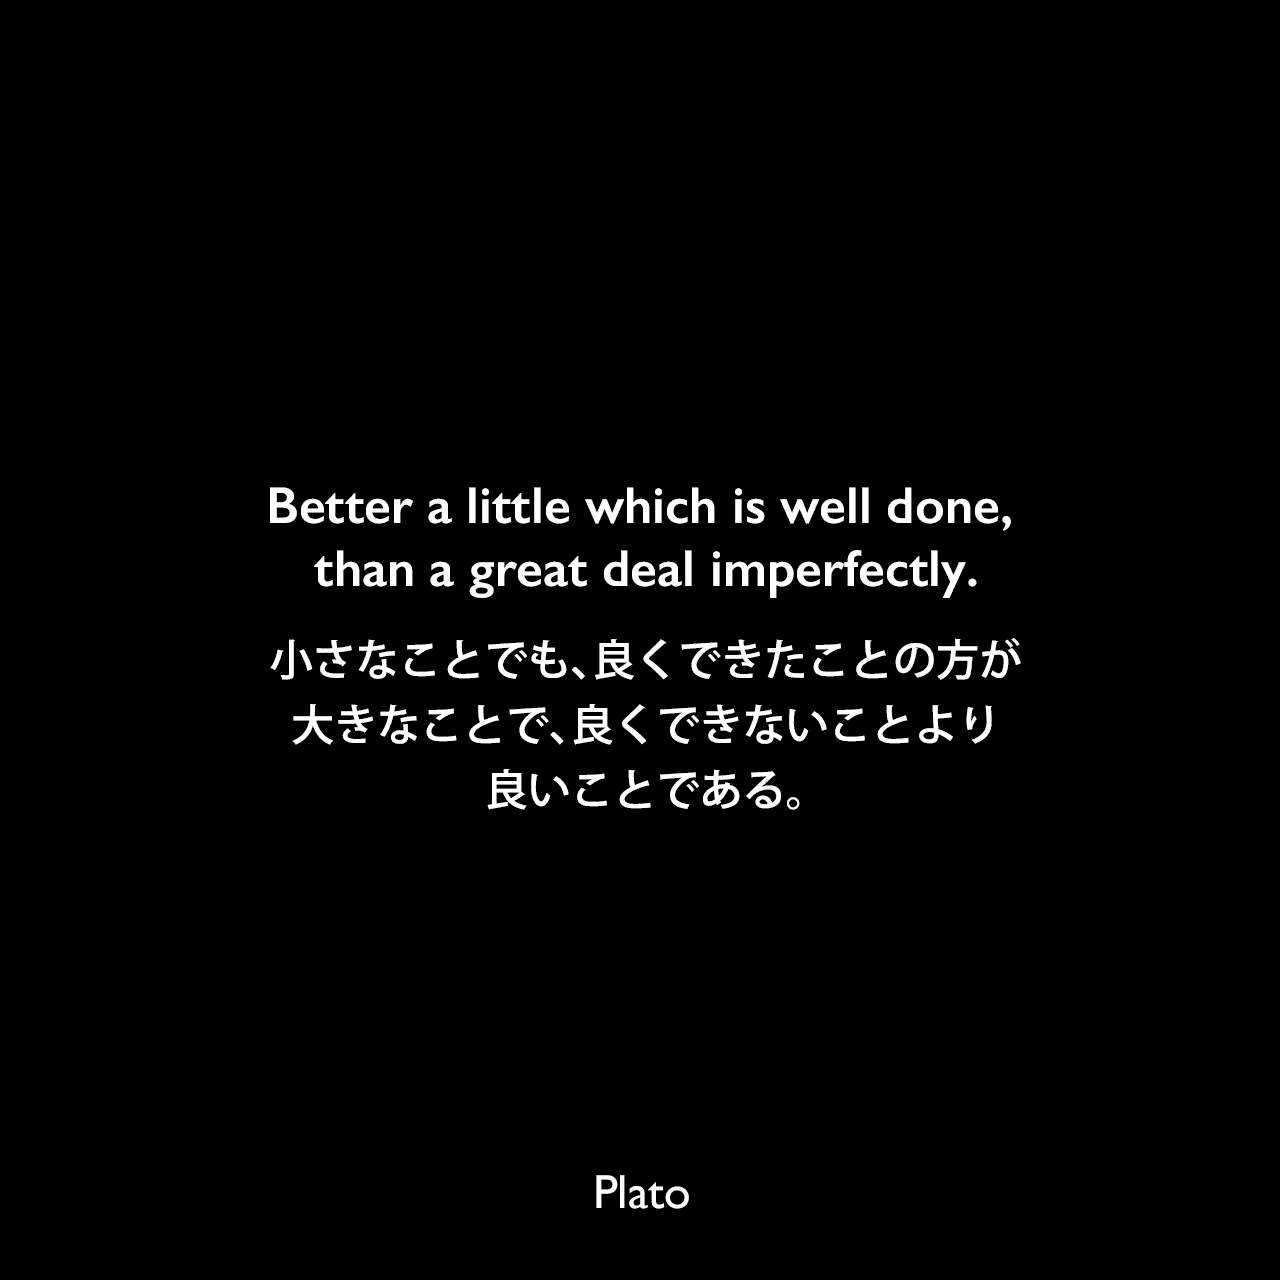 Better a little which is well done, than a great deal imperfectly.小さなことでも、良くできたことの方が、大きなことで、良くできないことより良いことである。Plato